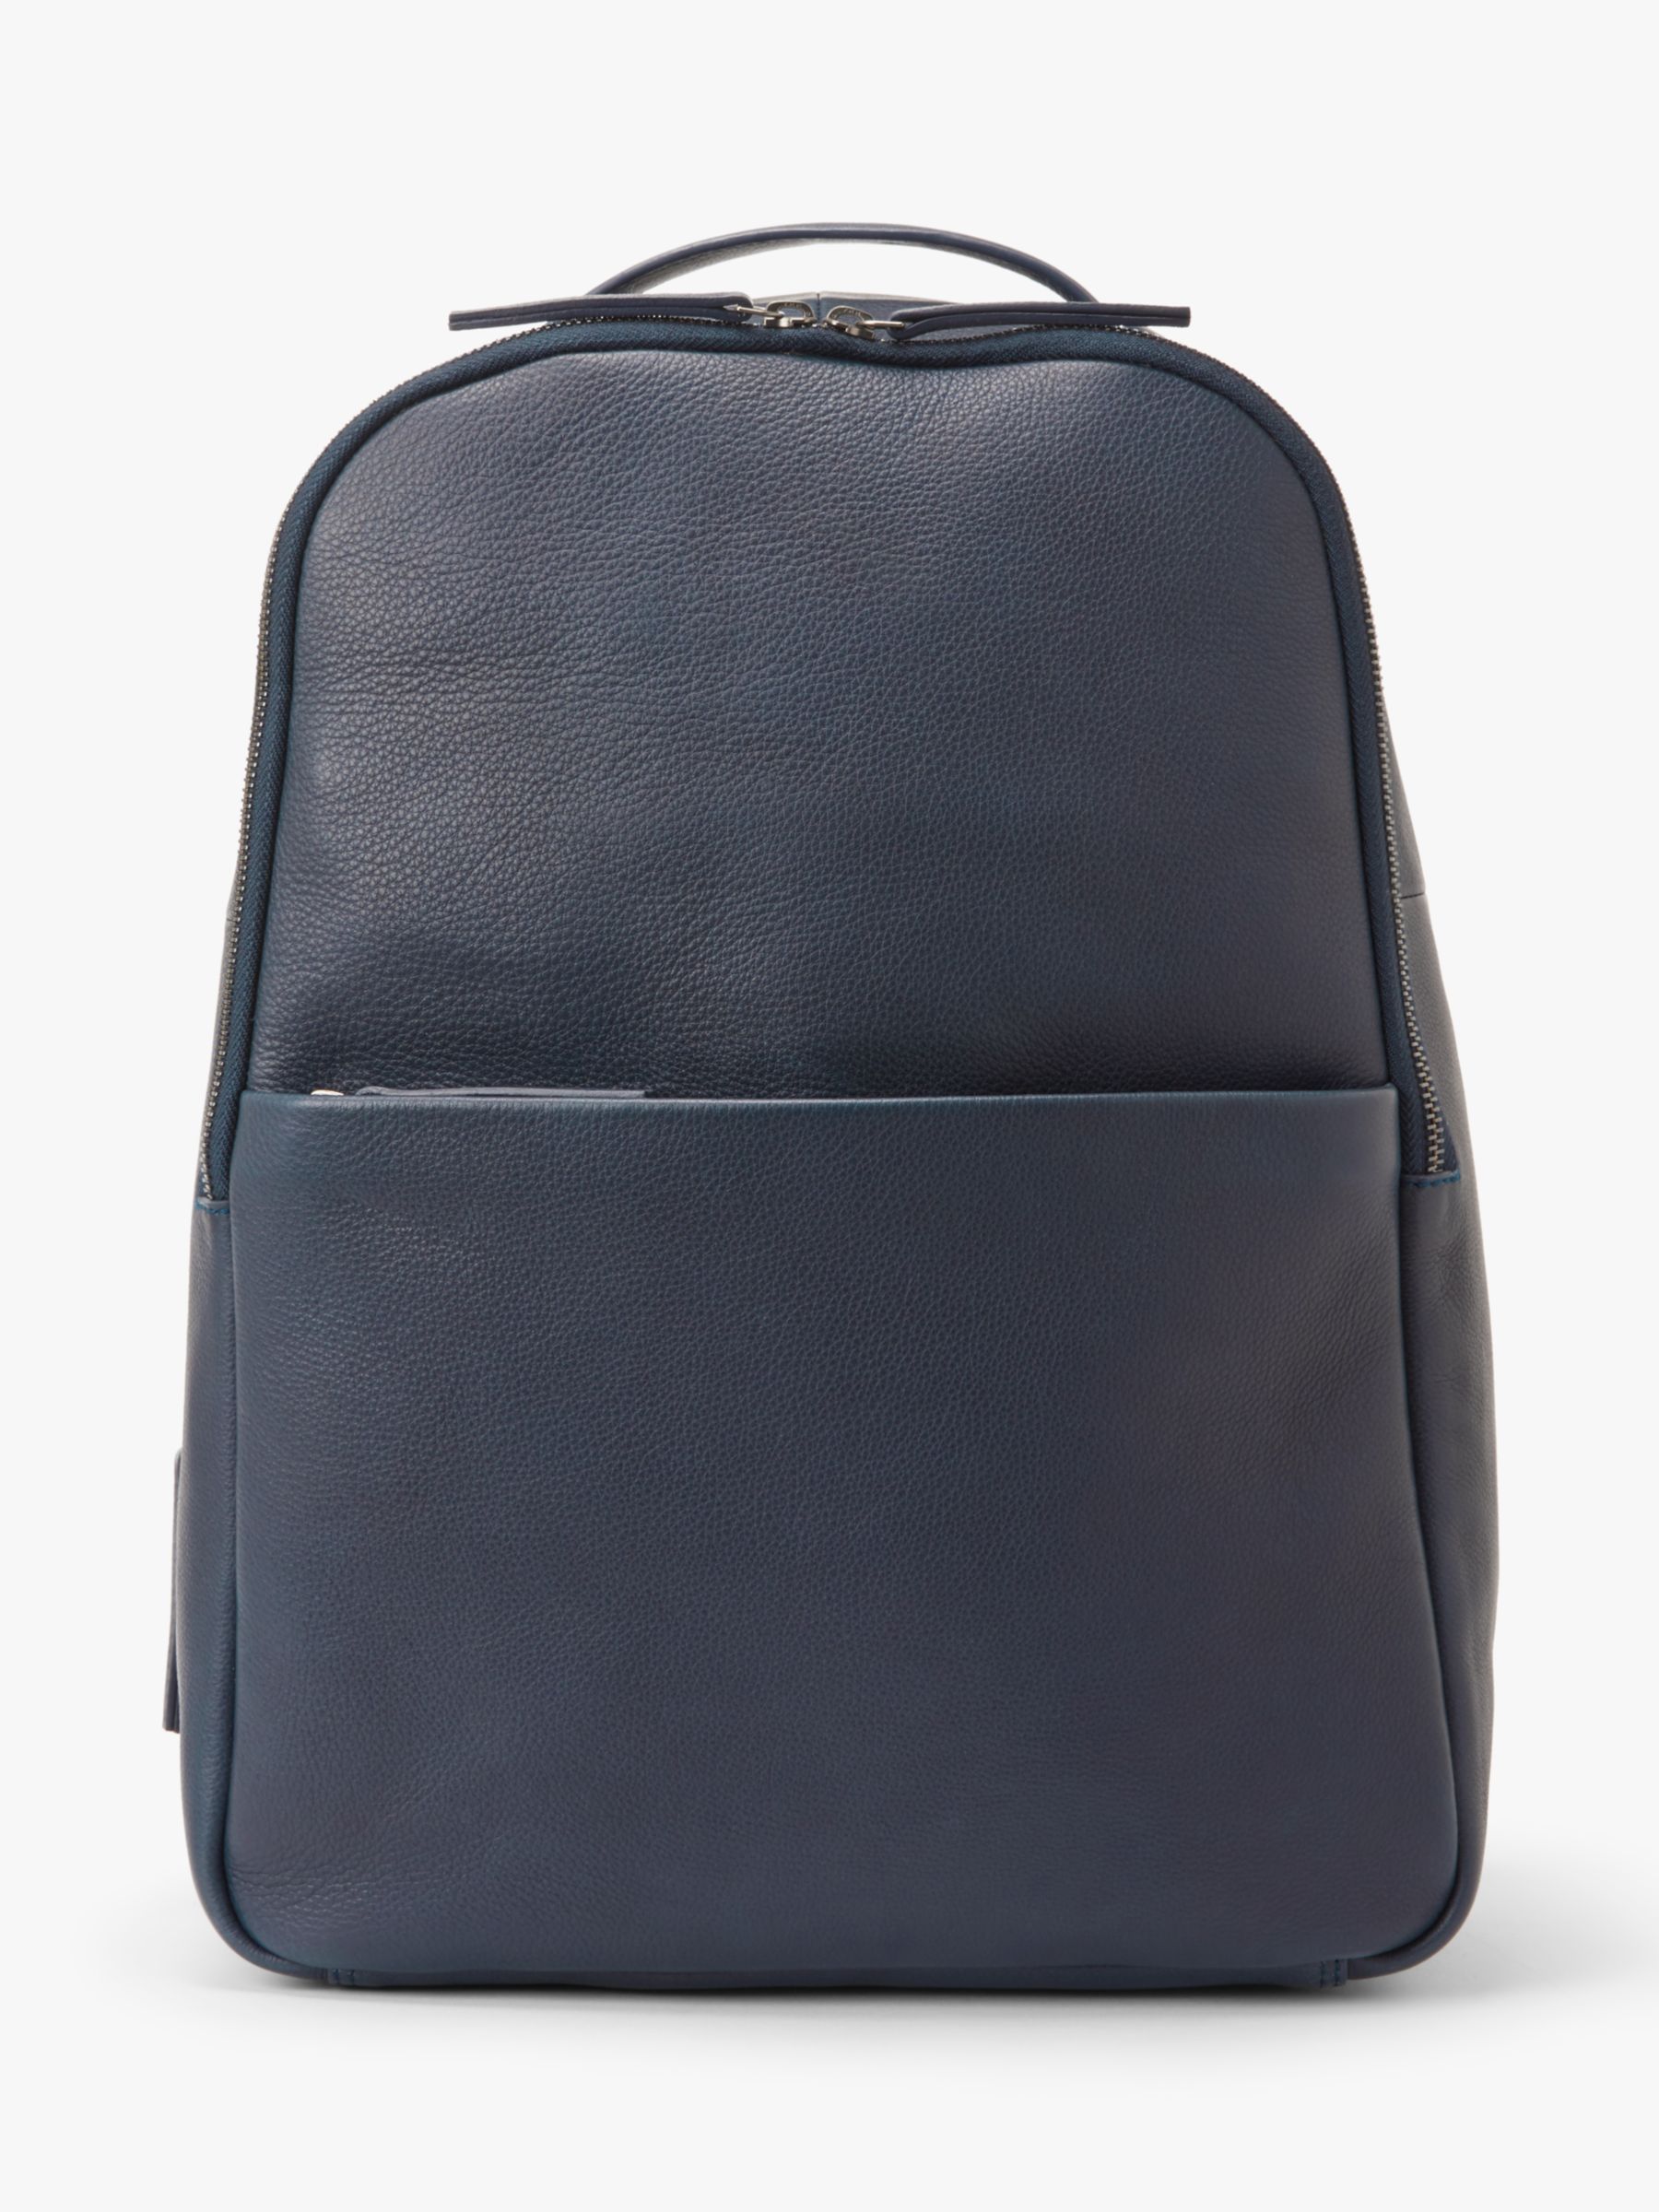 John Lewis & Partners Oslo Leather Backpack